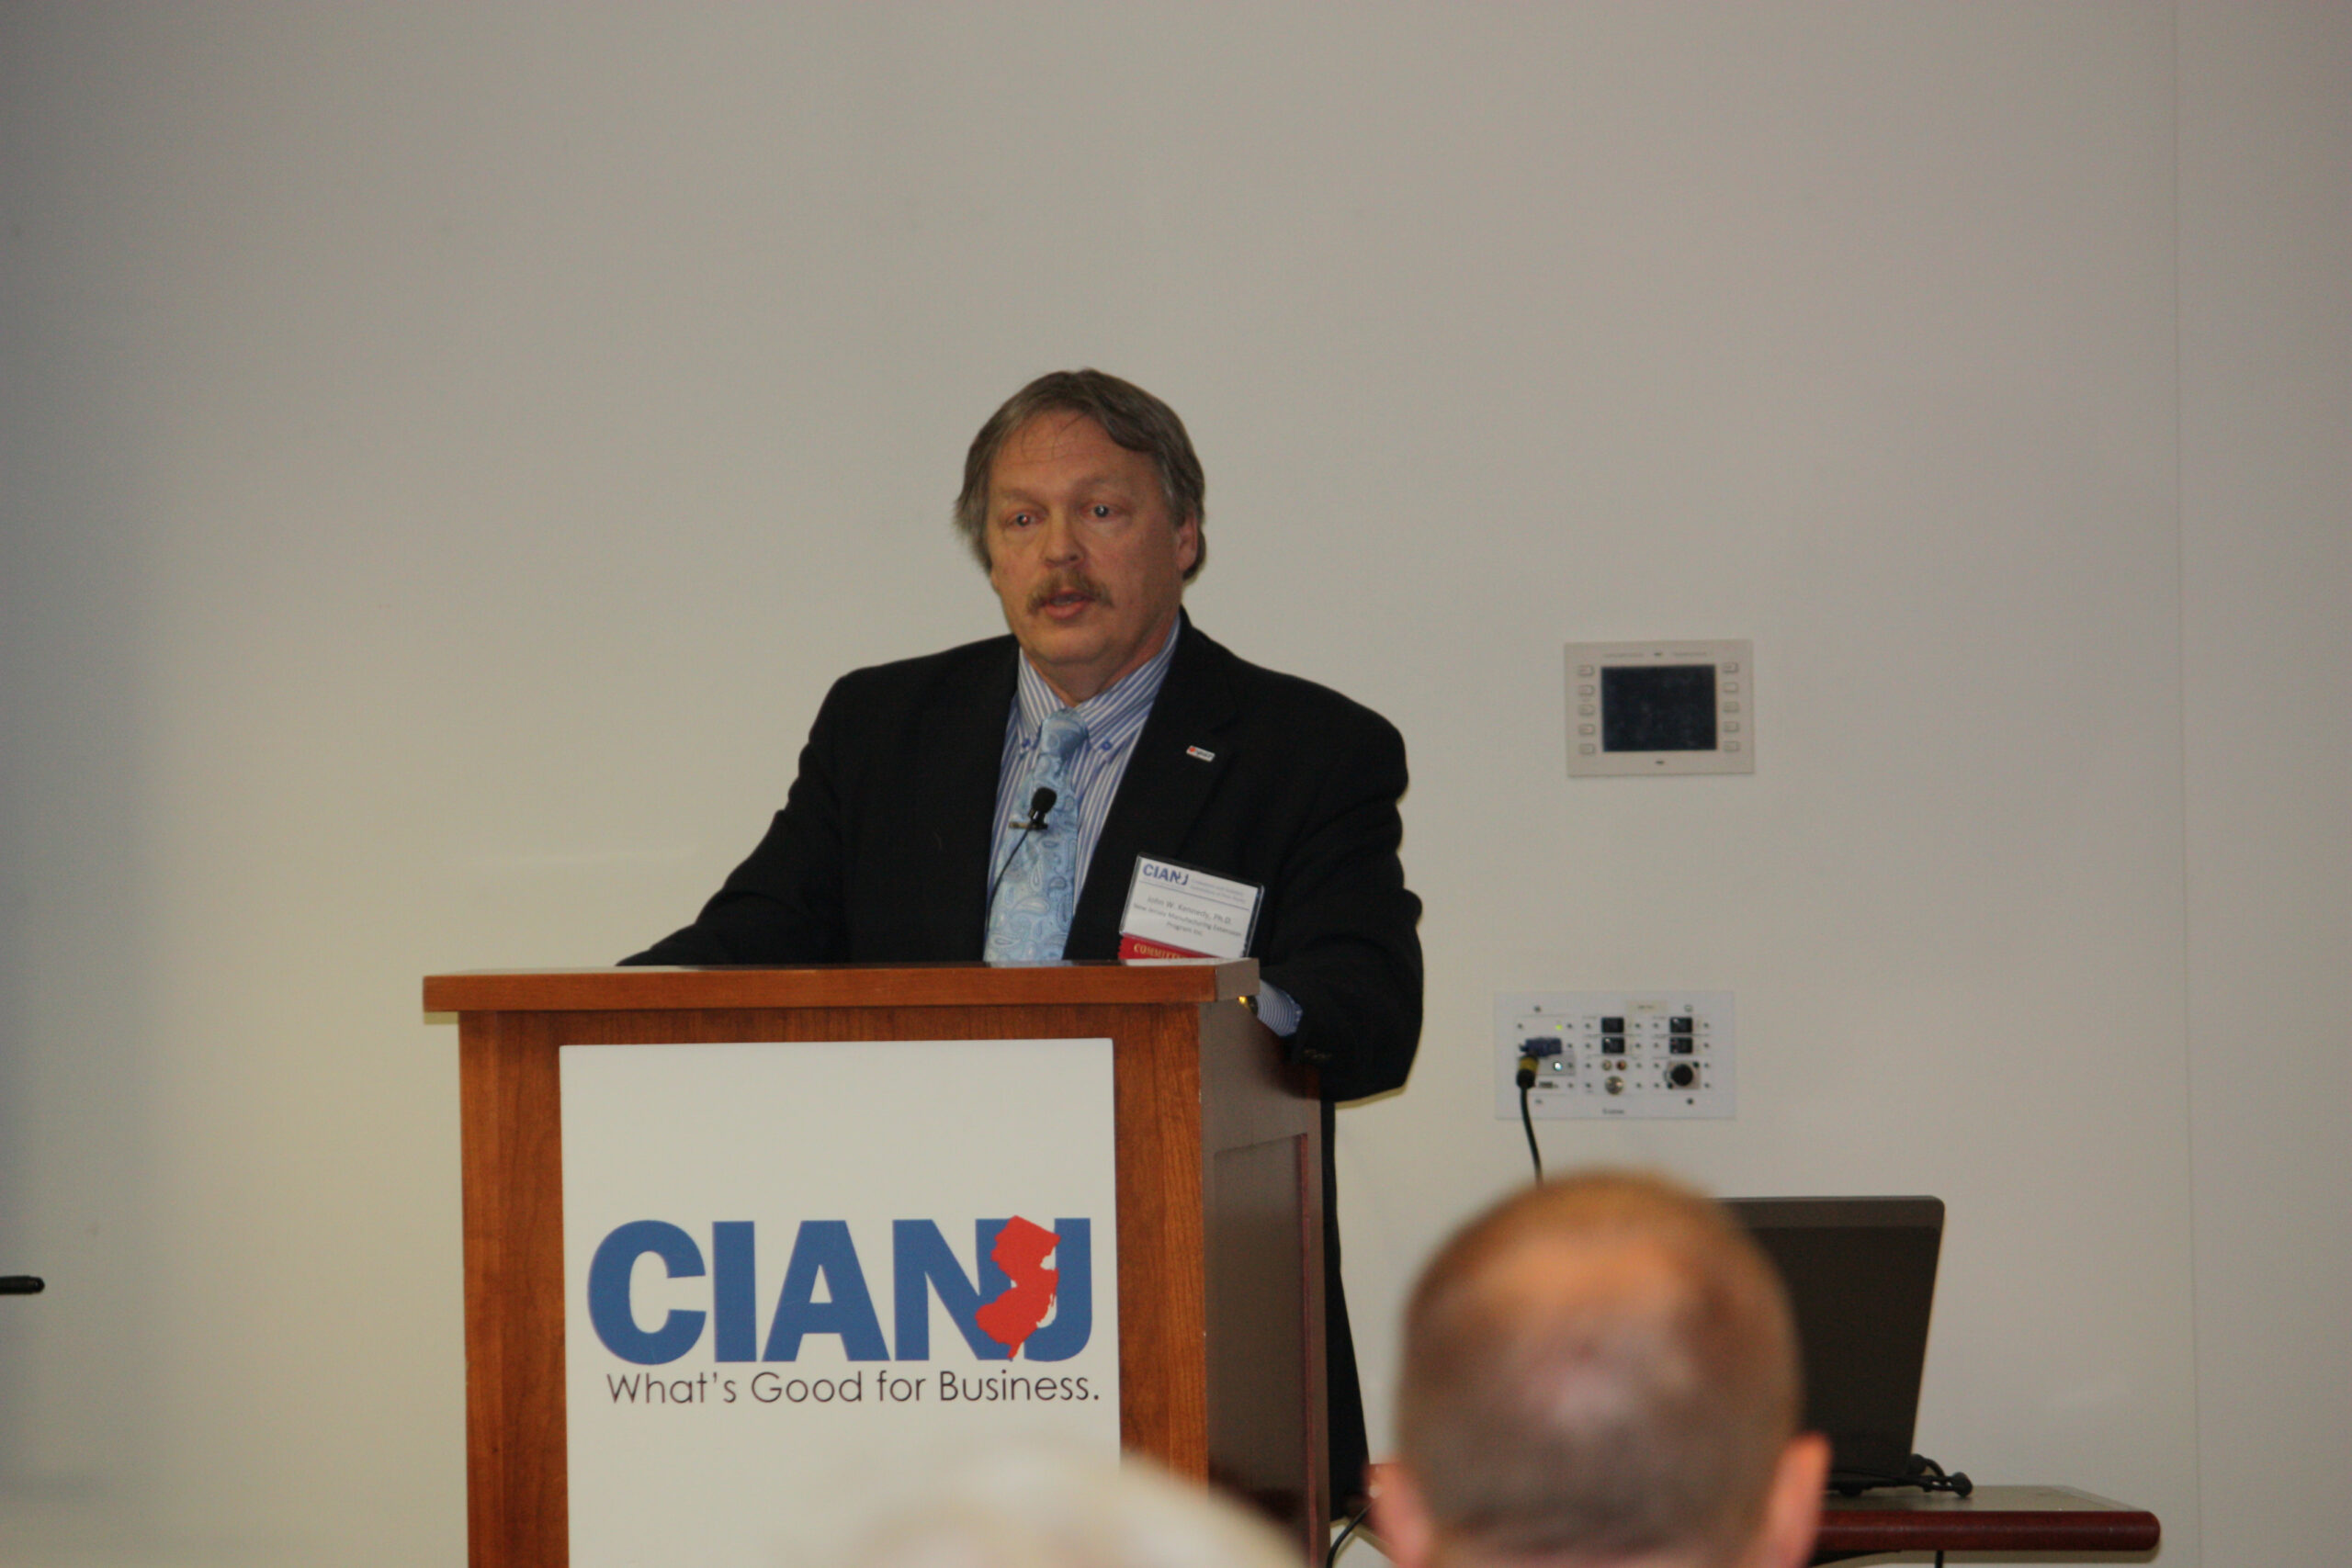 NJMEP's CEO Participates in CIANJ's Manufacturing Summit